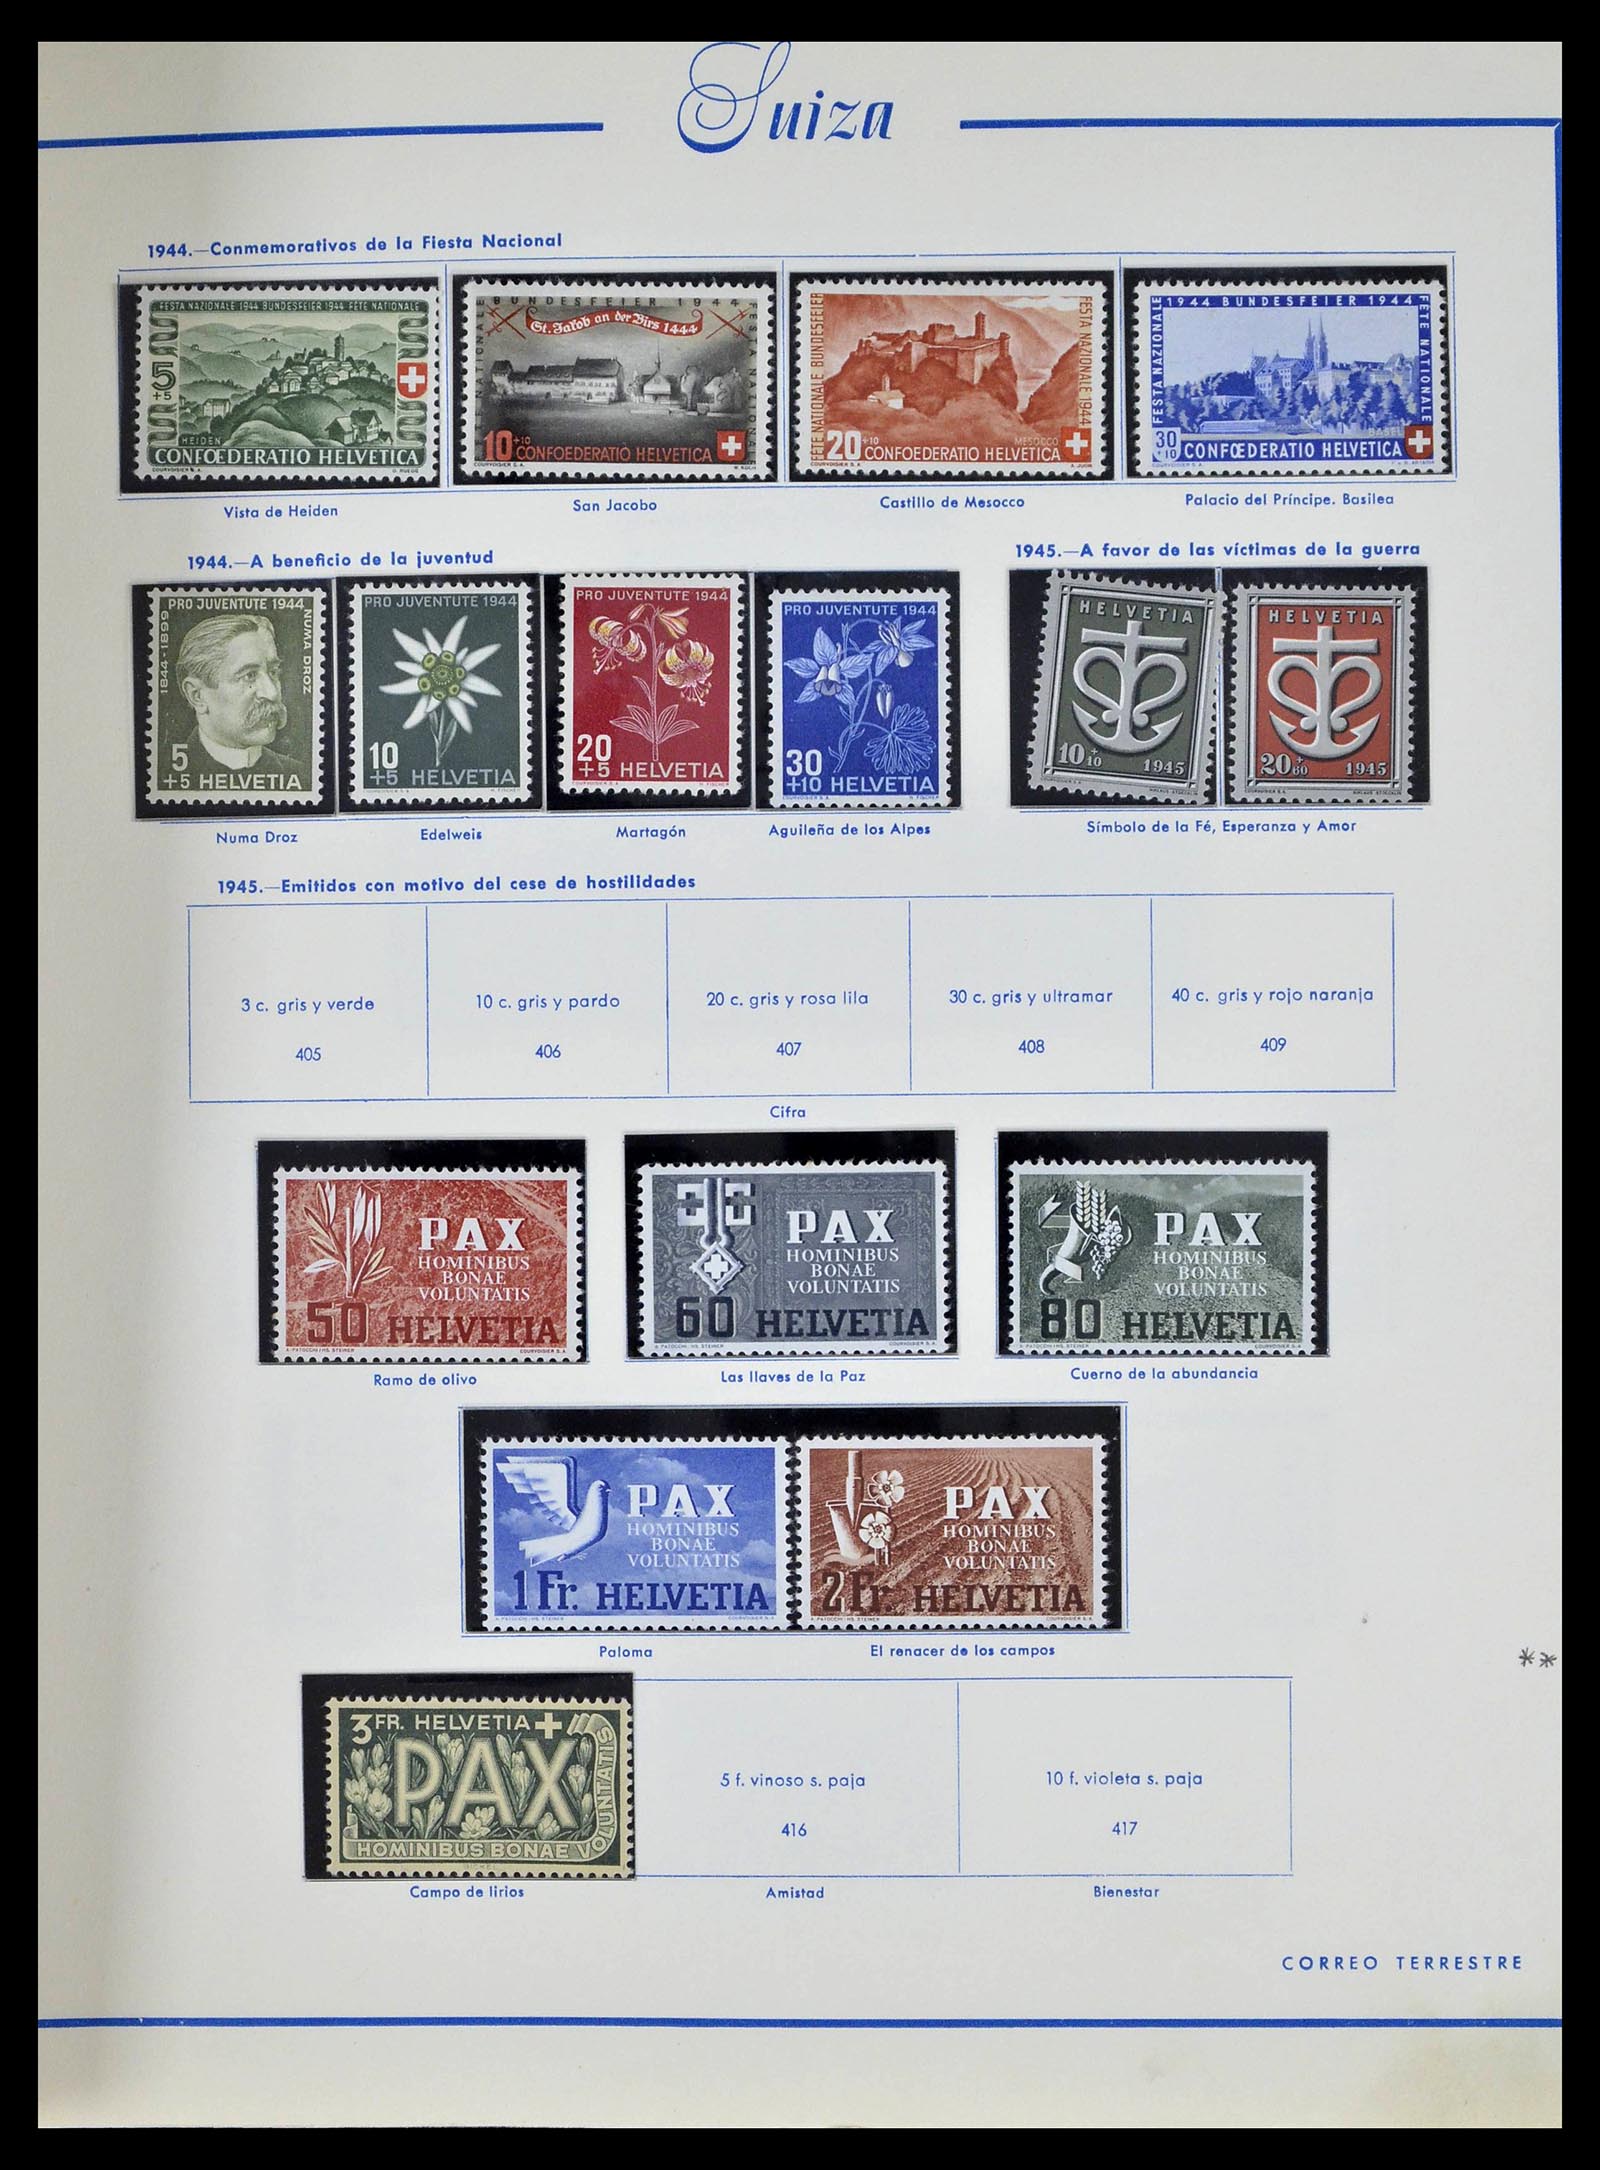 39217 0024 - Stamp collection 39217 Switzerland 1850-1986.